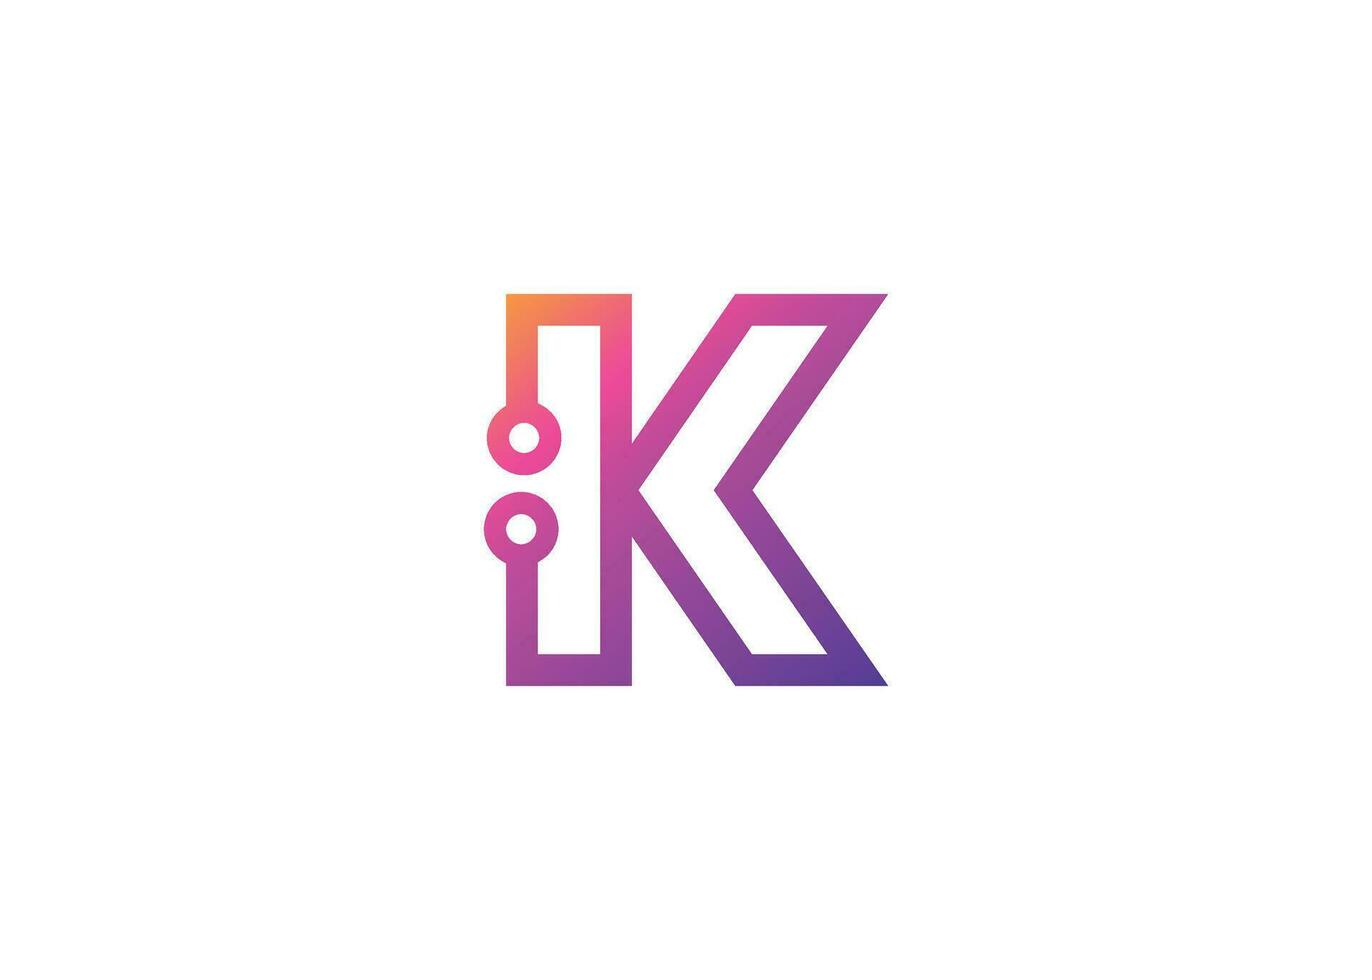 Letter K Technology vector monogram logo design template. Letter K molecule, Science and Bio technology Vector logo